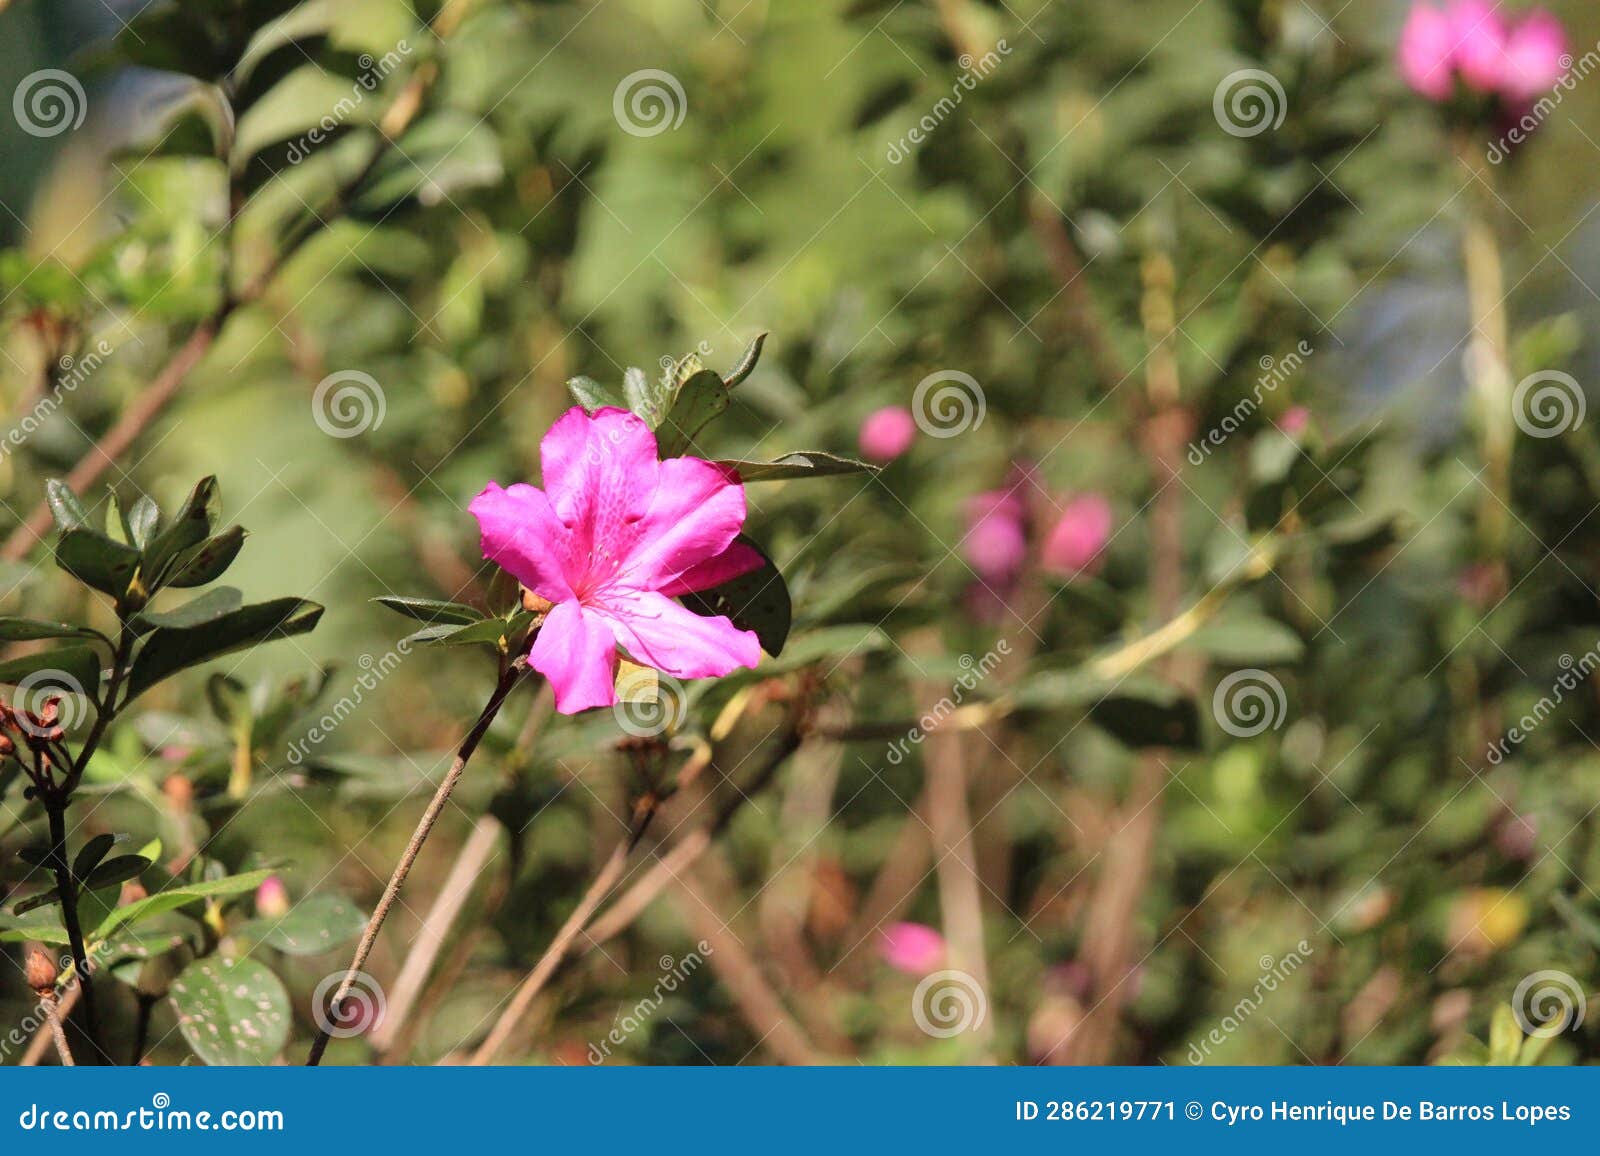 rose flower details background,rosa,rosa rubiginosa, european species, introduced species